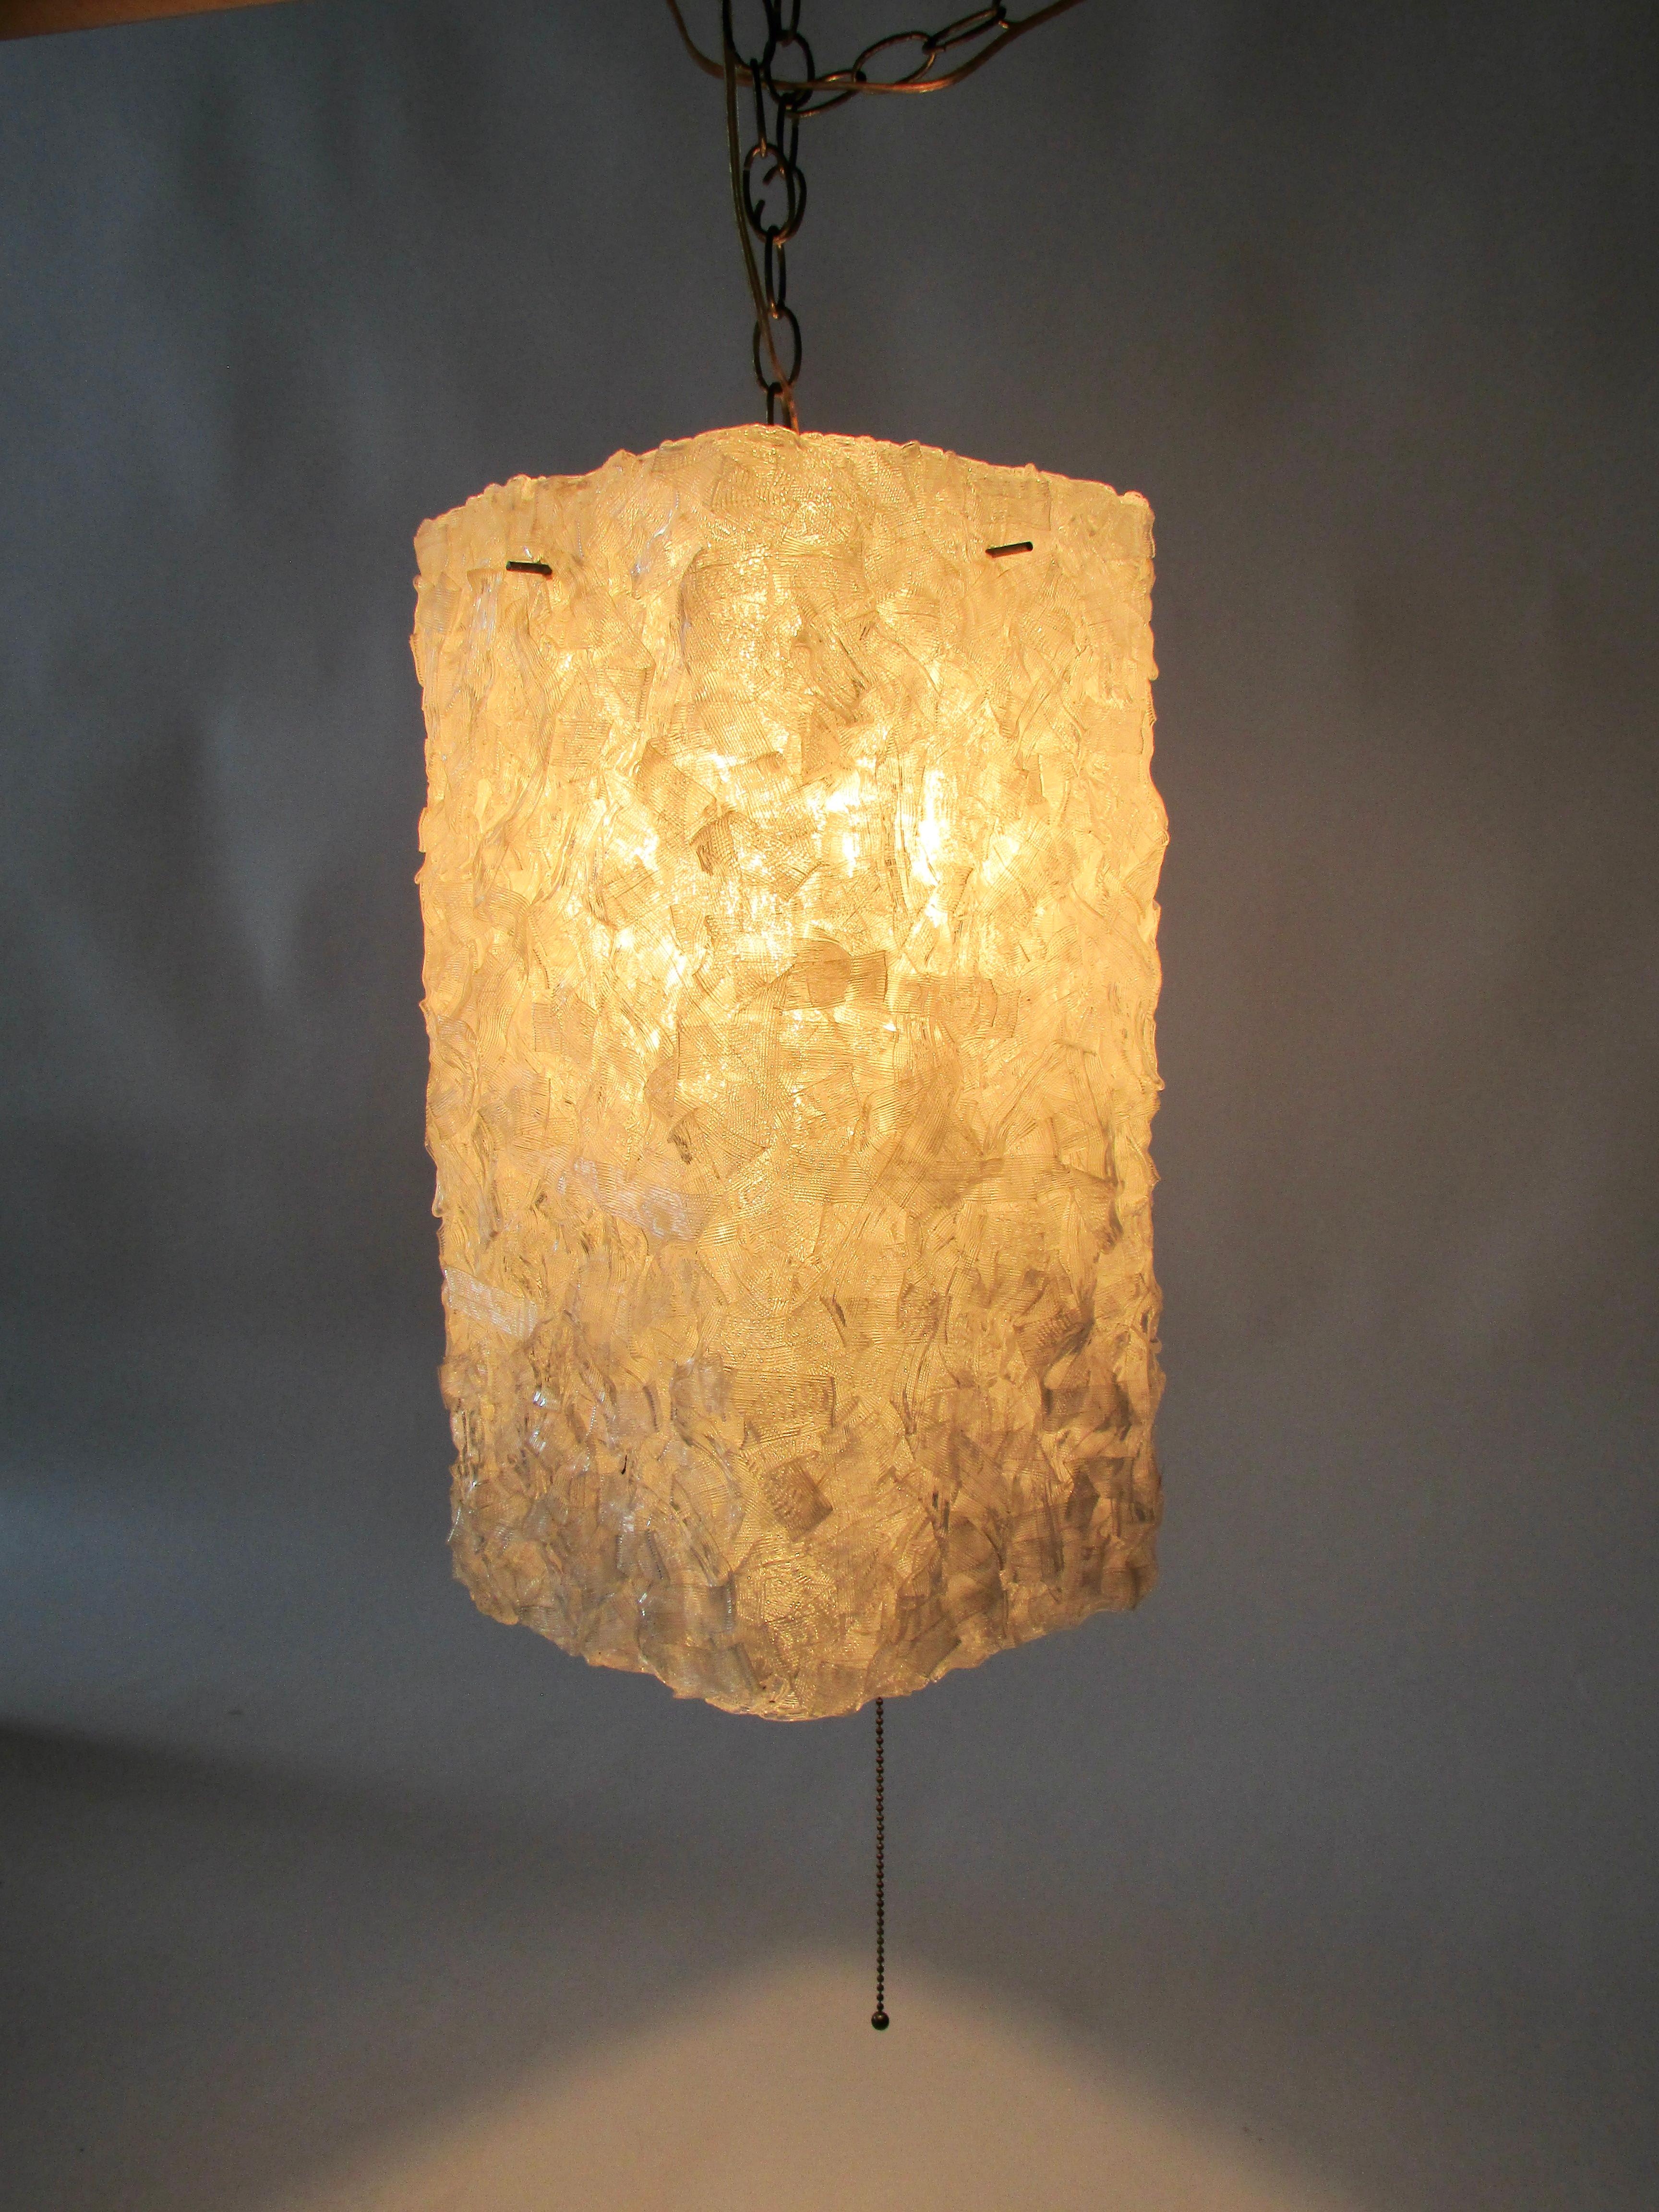 Acier Lampe carrée suspendue en plastique pressé blanc en forme de ruban en vente